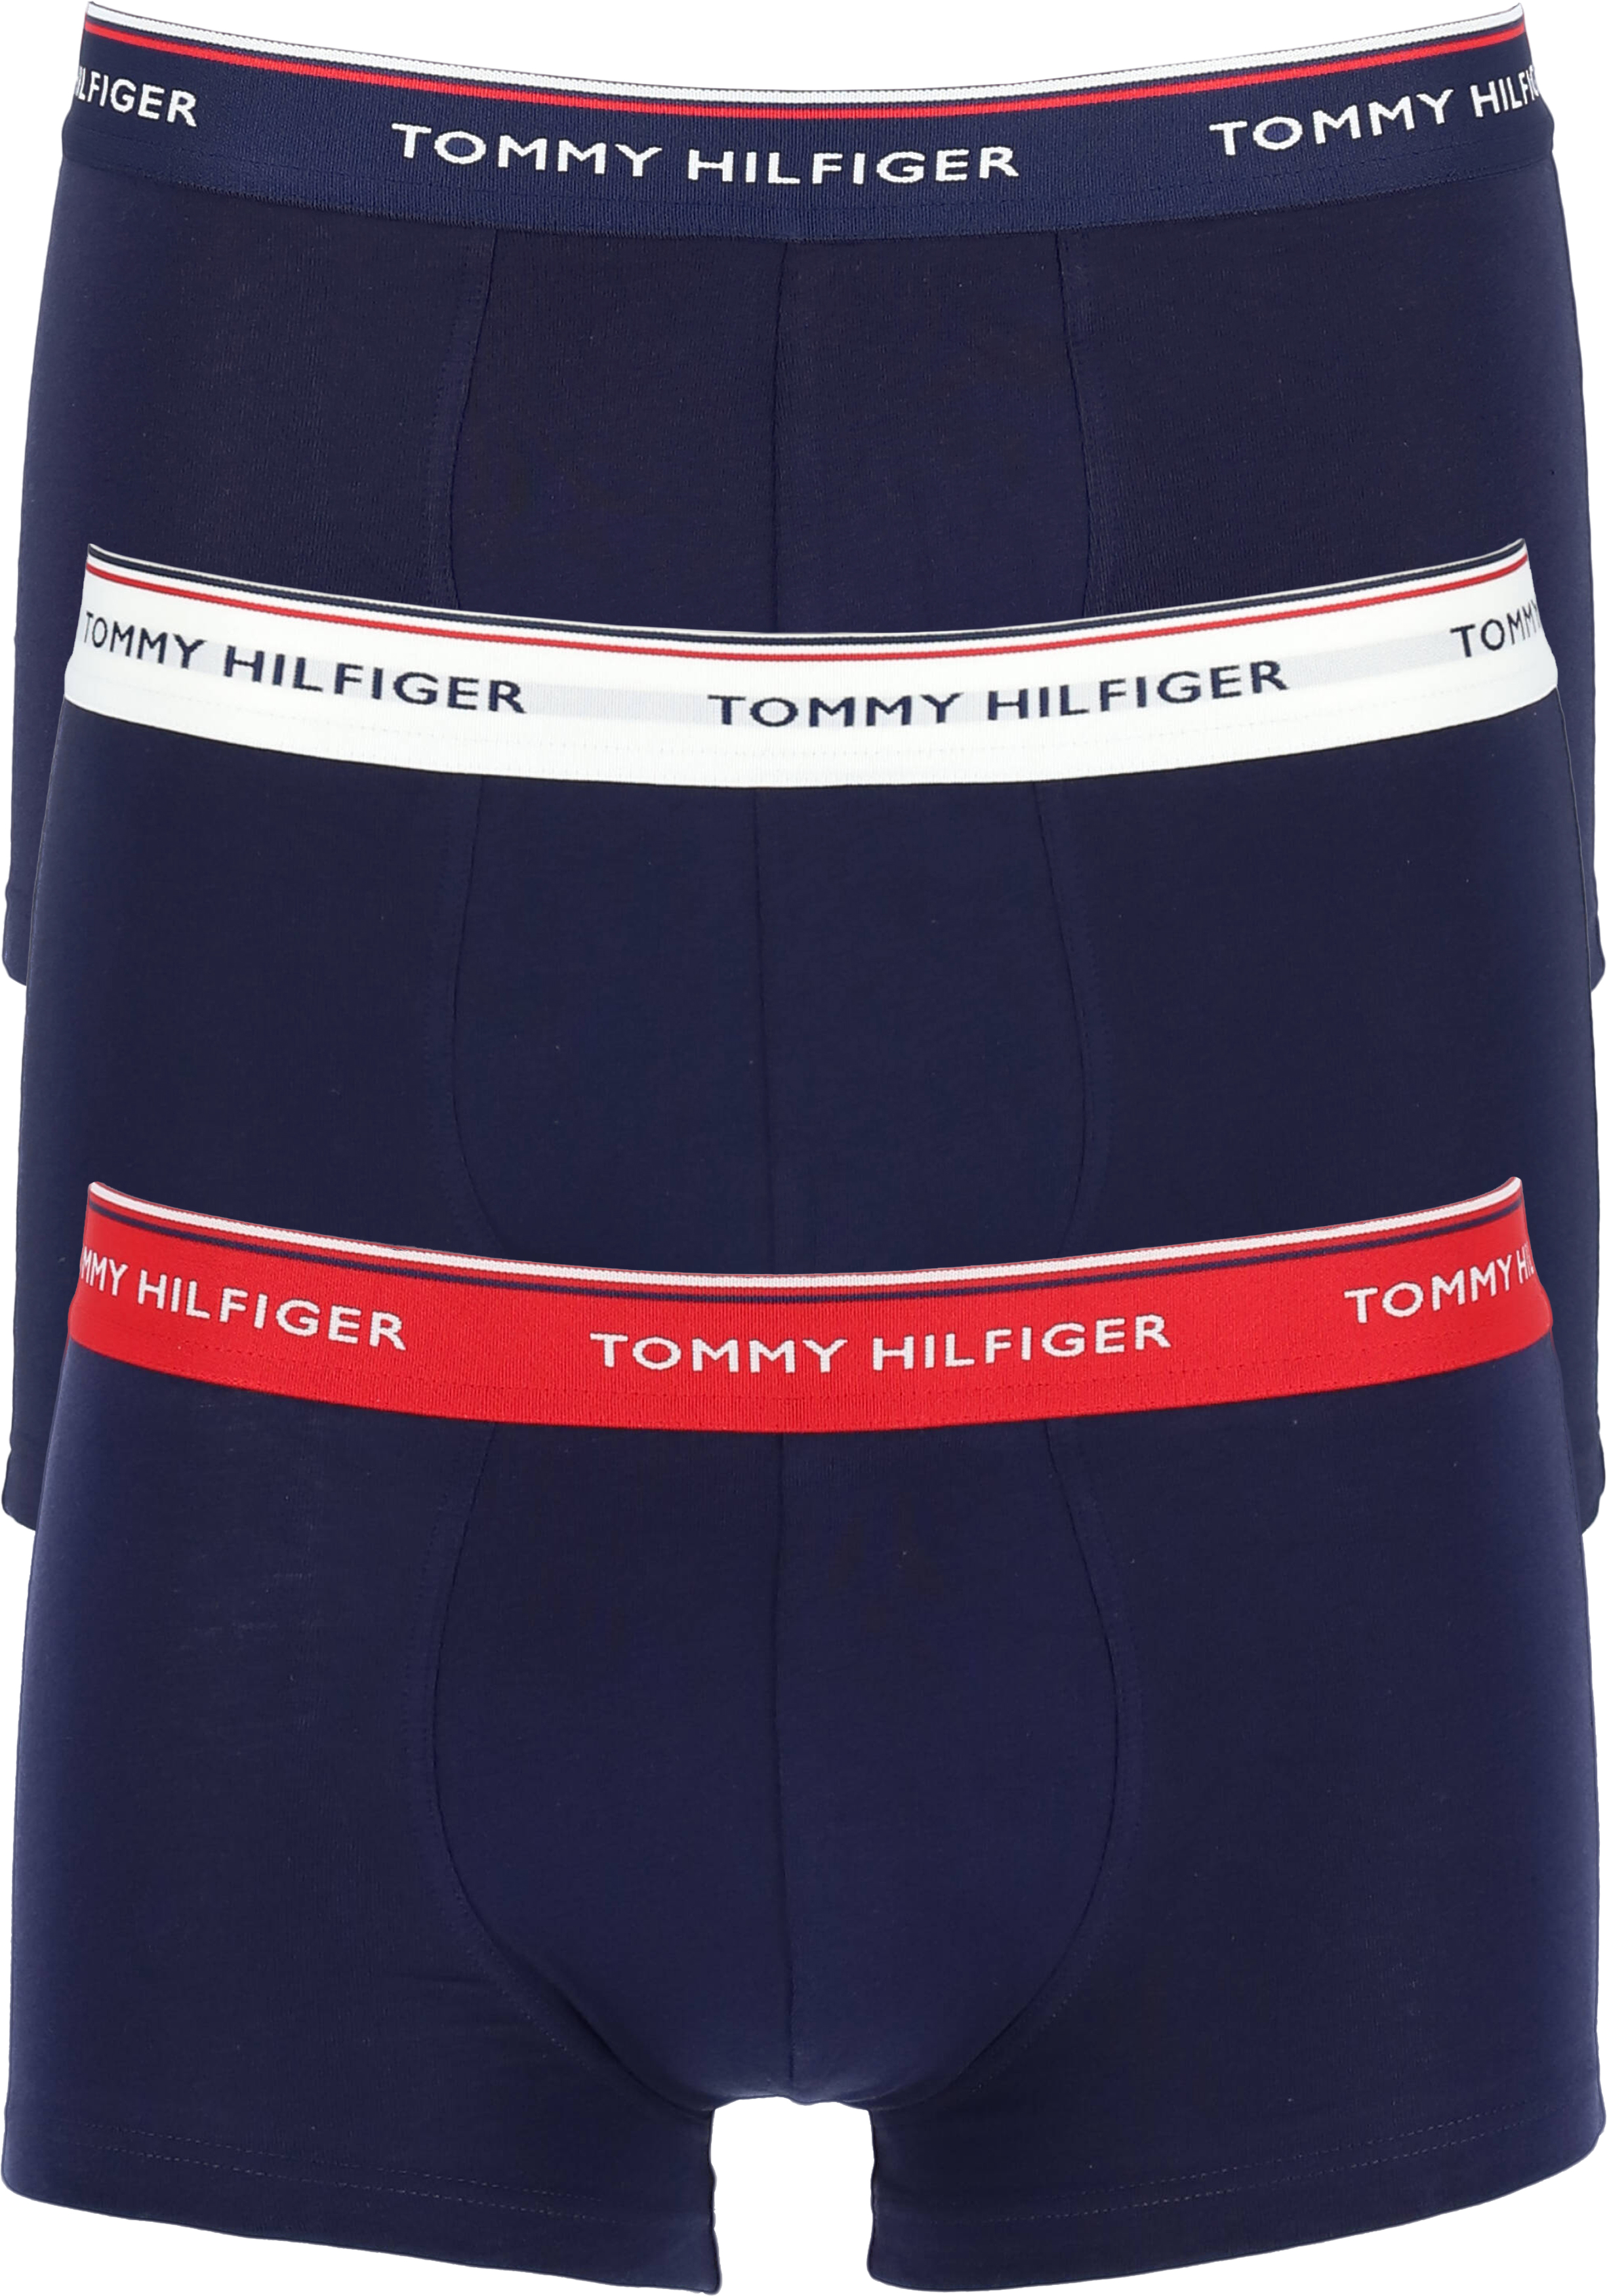 Tommy Hilfiger low rise trunk (3-pack), lage heren boxers kort, blauw... - FINAL SALE tot 70% - Gratis verzending en retour